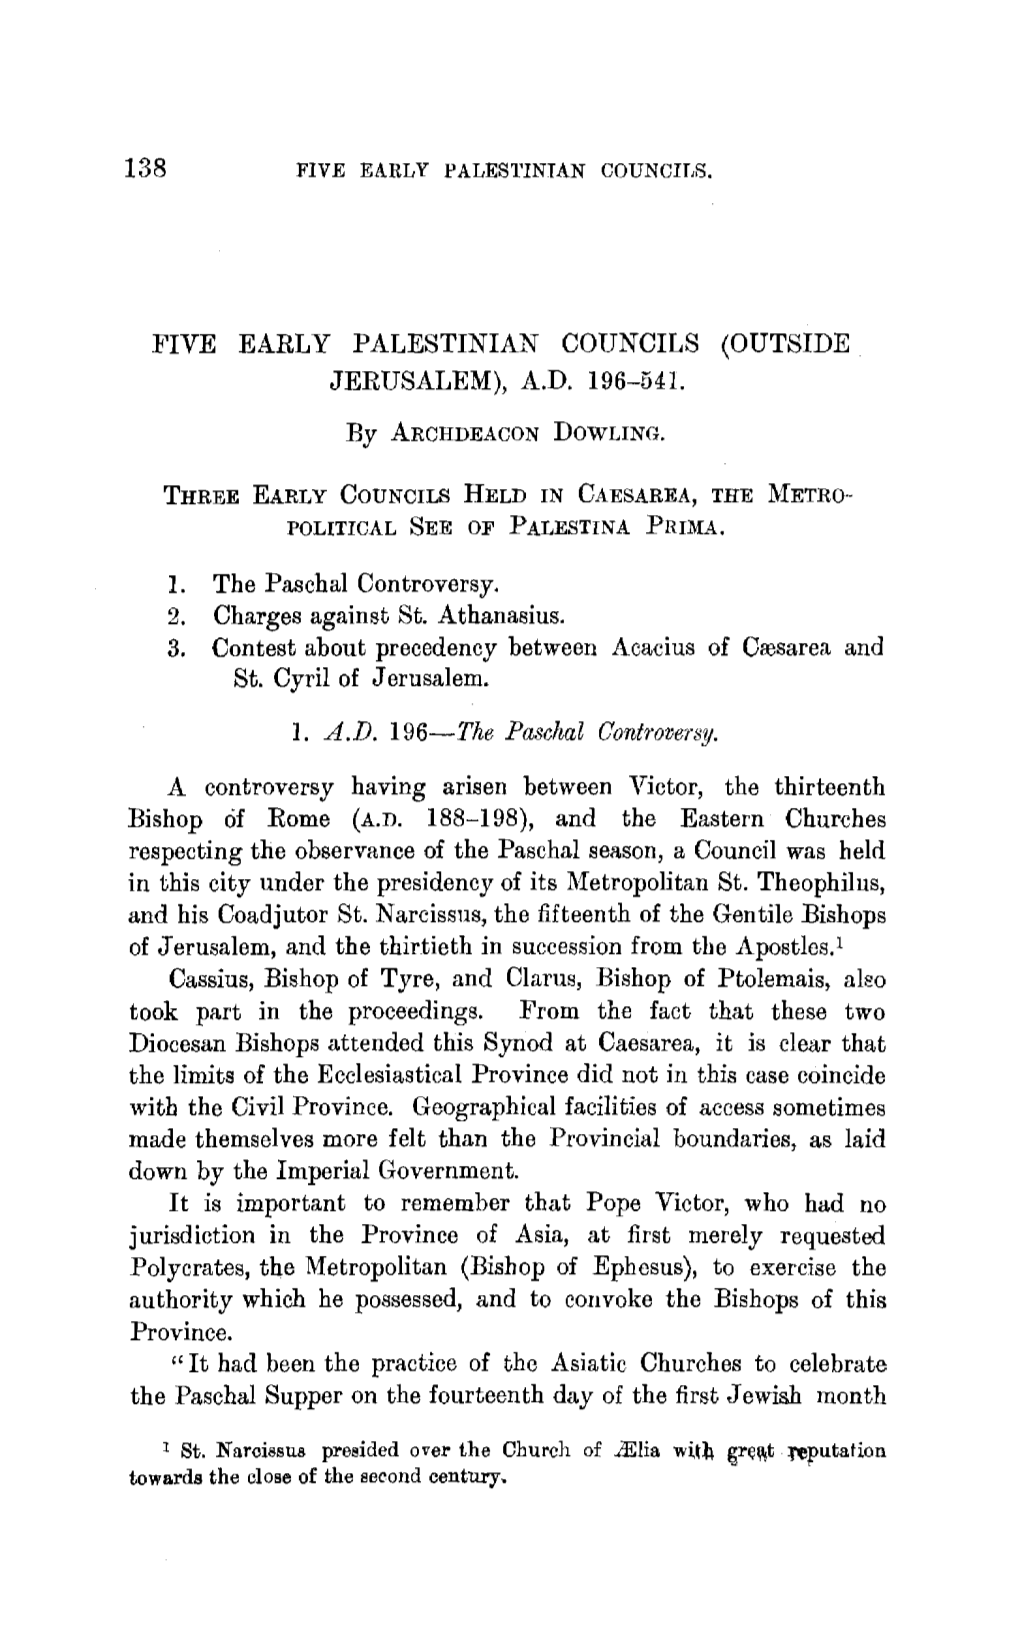 Five Early Palestinian Councils (Outside Jerusalem), A.D